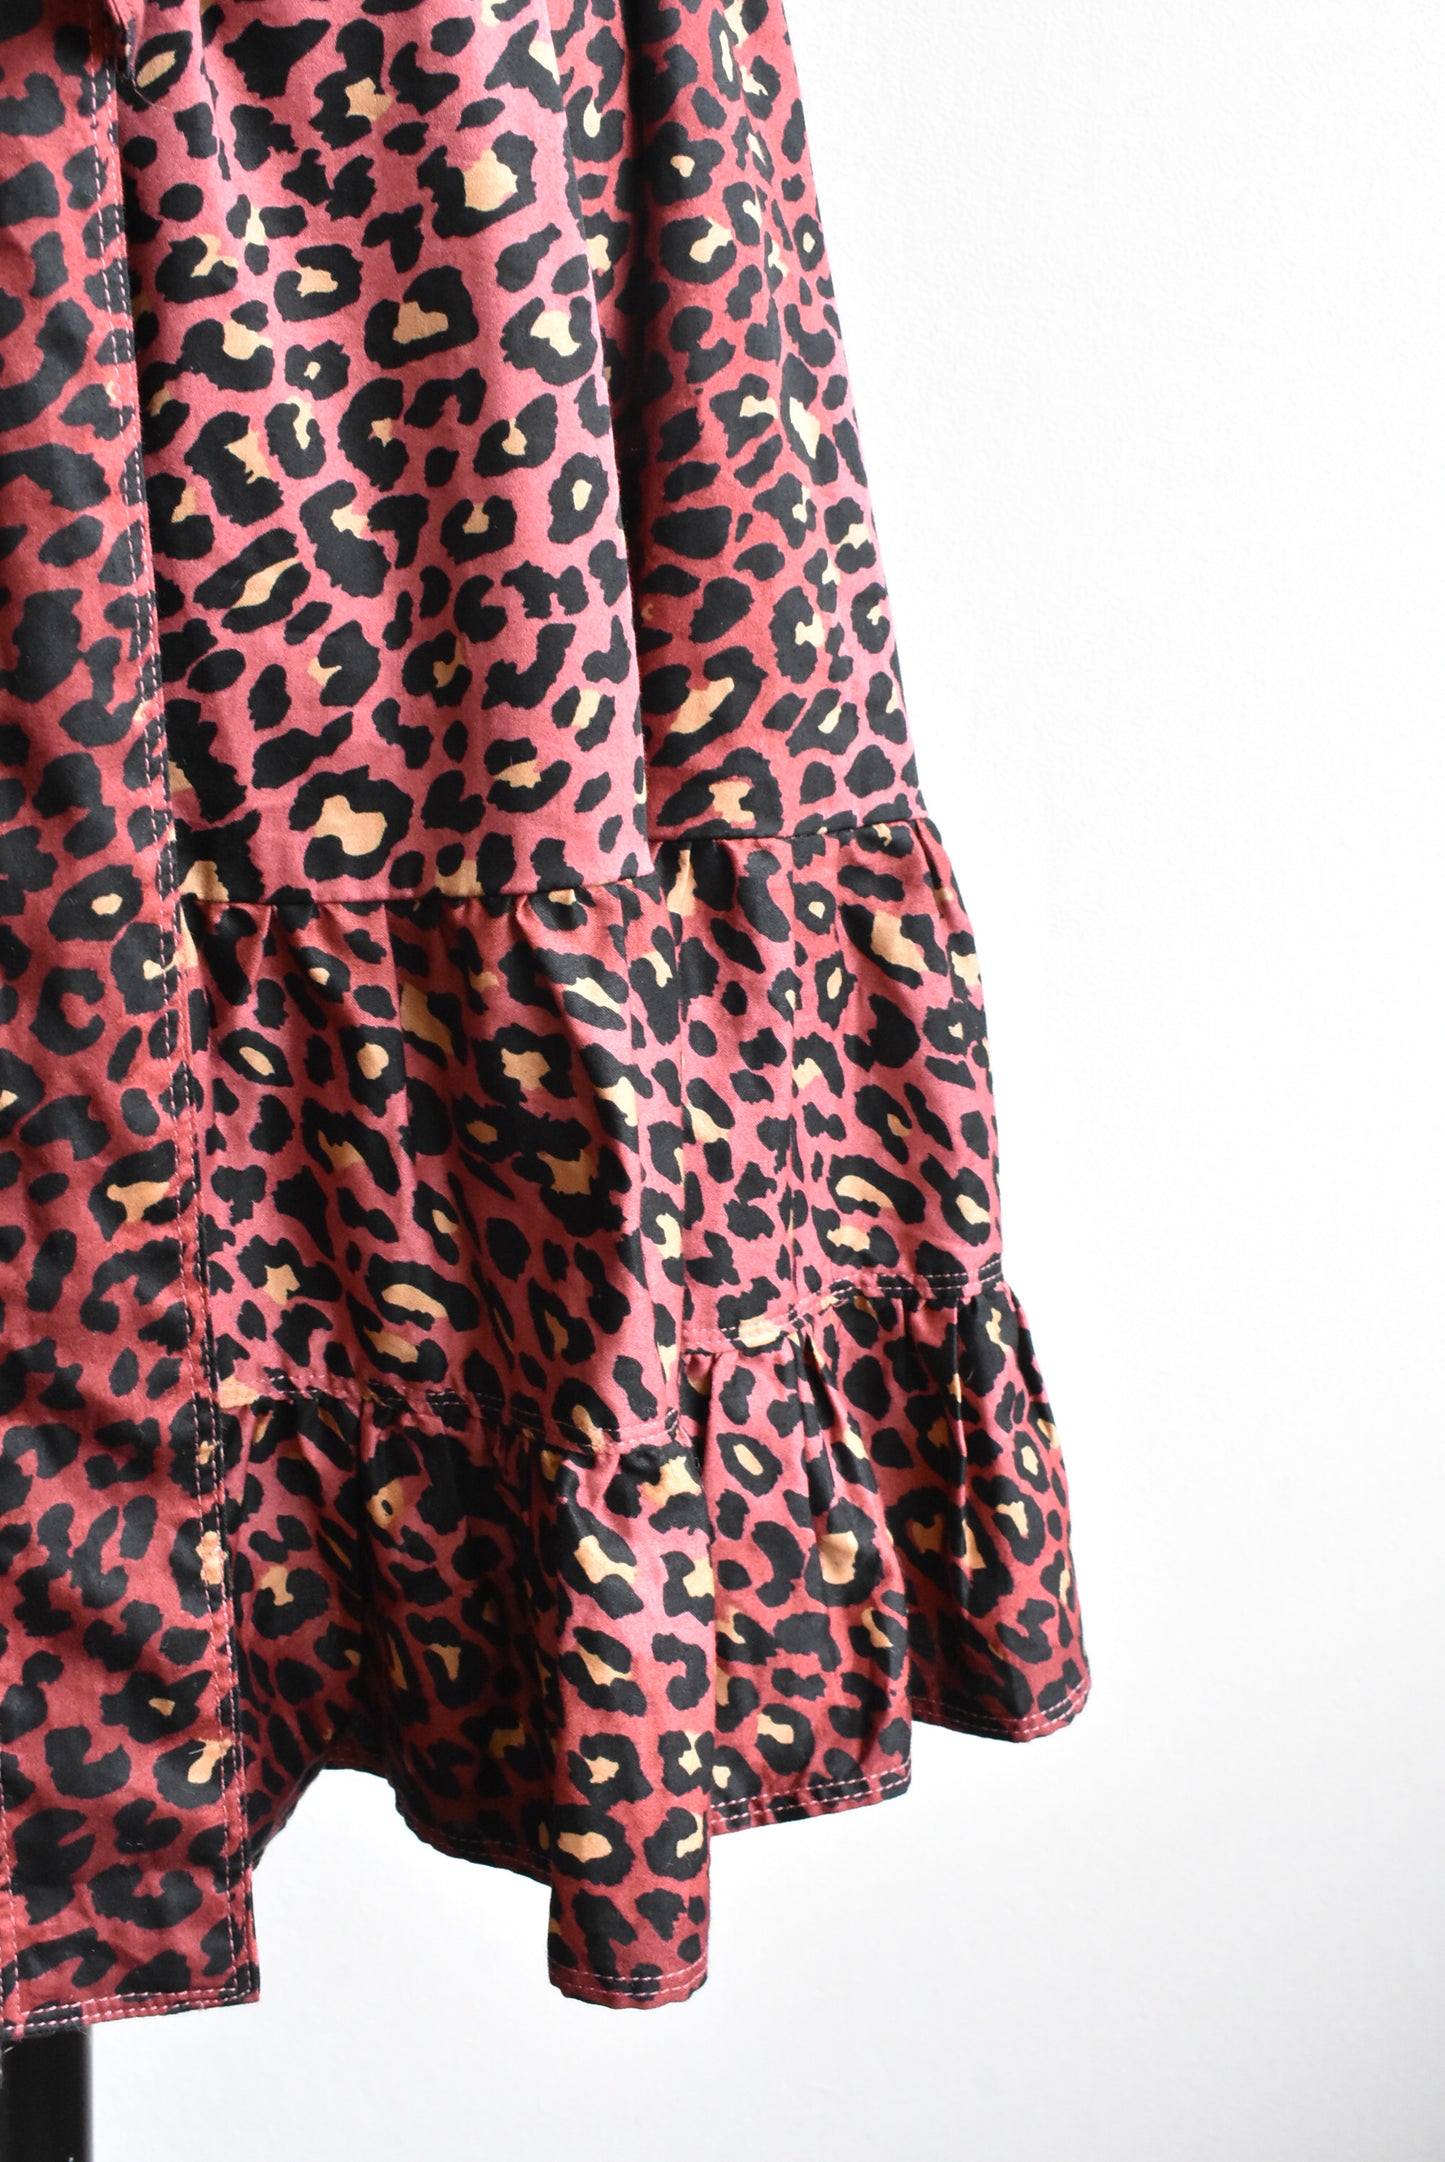 Red leopard print wrap dress, size 10